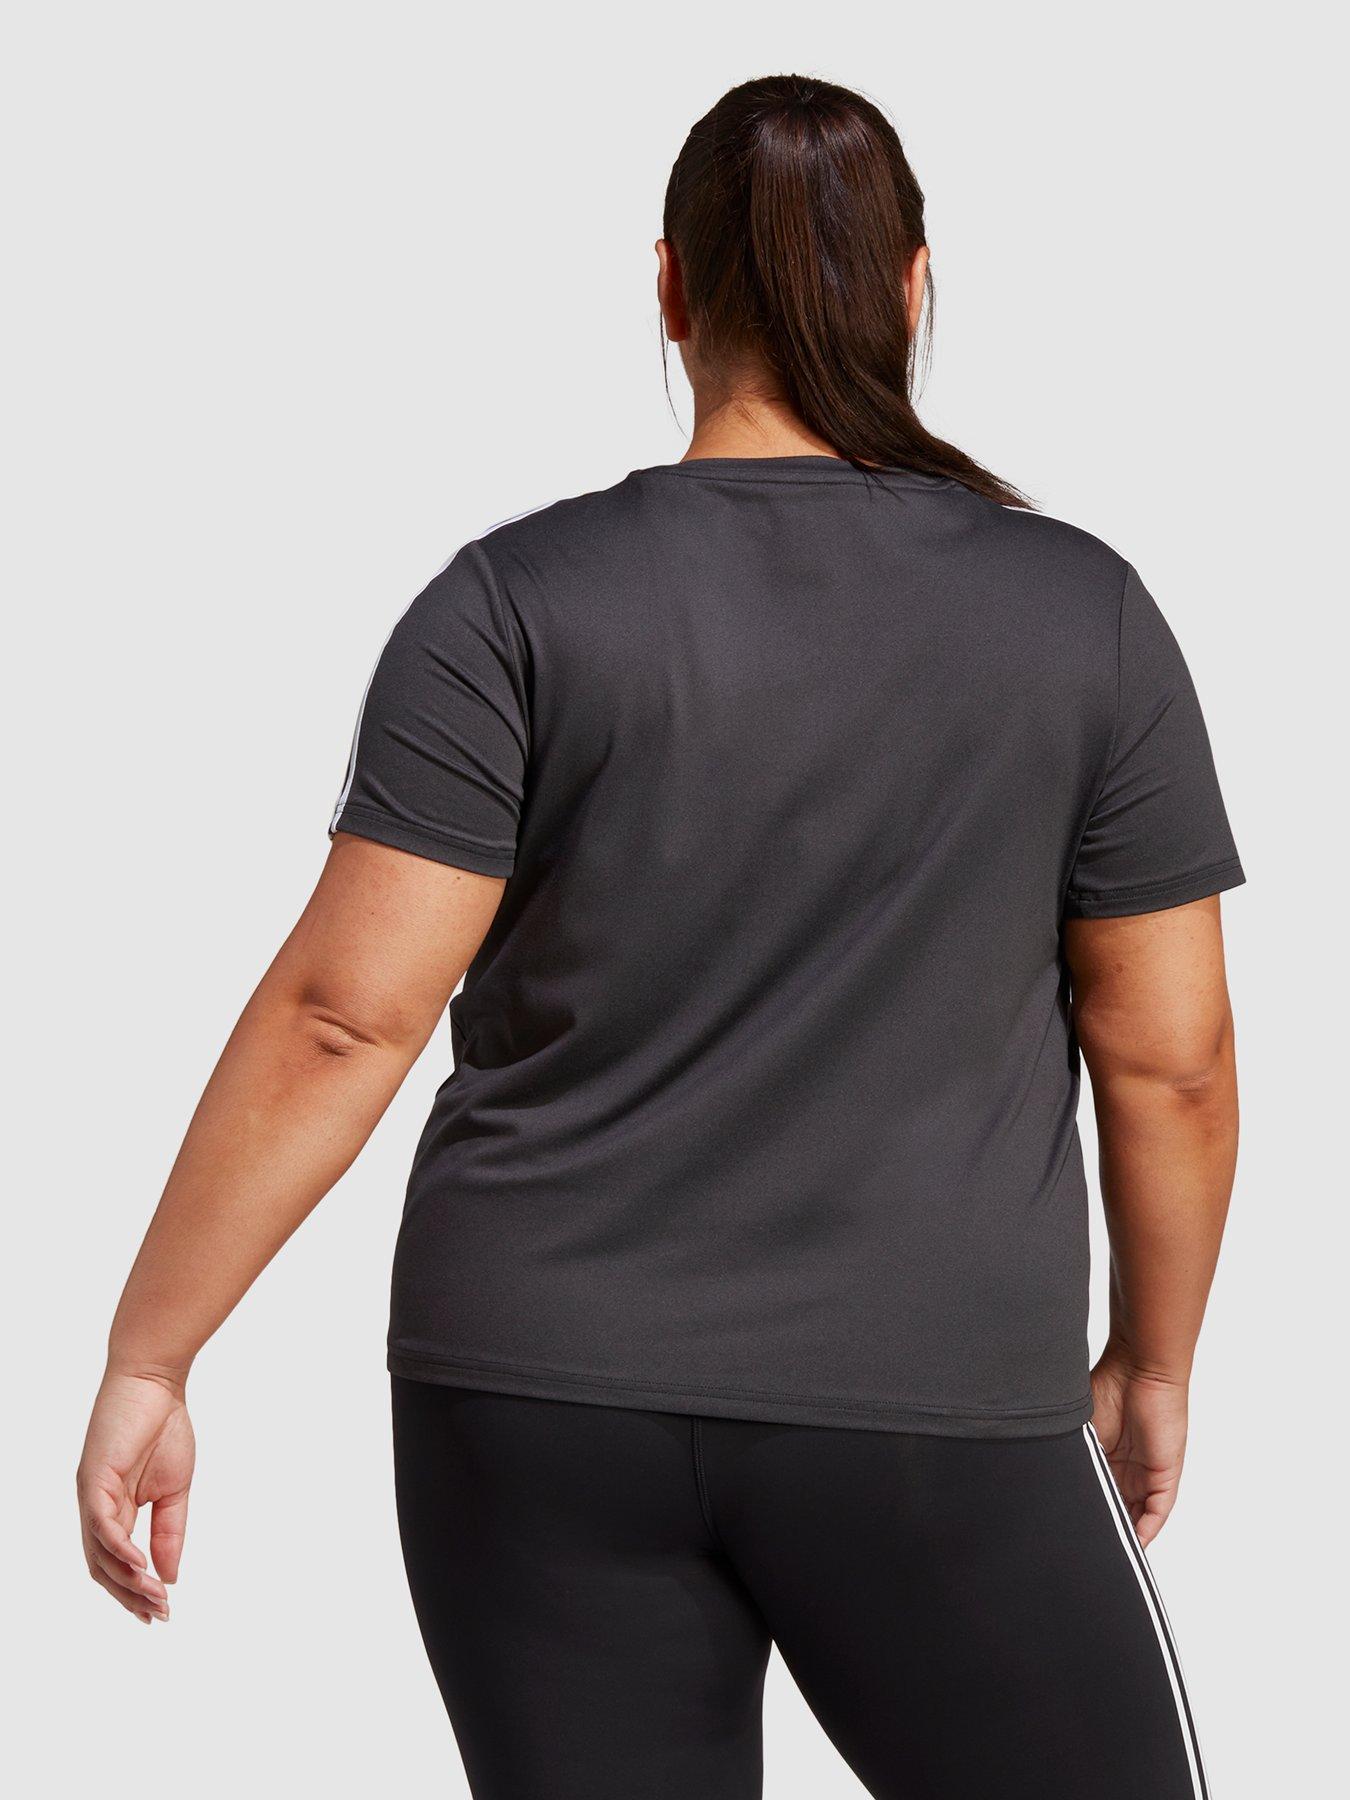 Women's Plus Size Short Sleeve Split Back Sports Top Athletic Gym Shirts  2XL(16) 